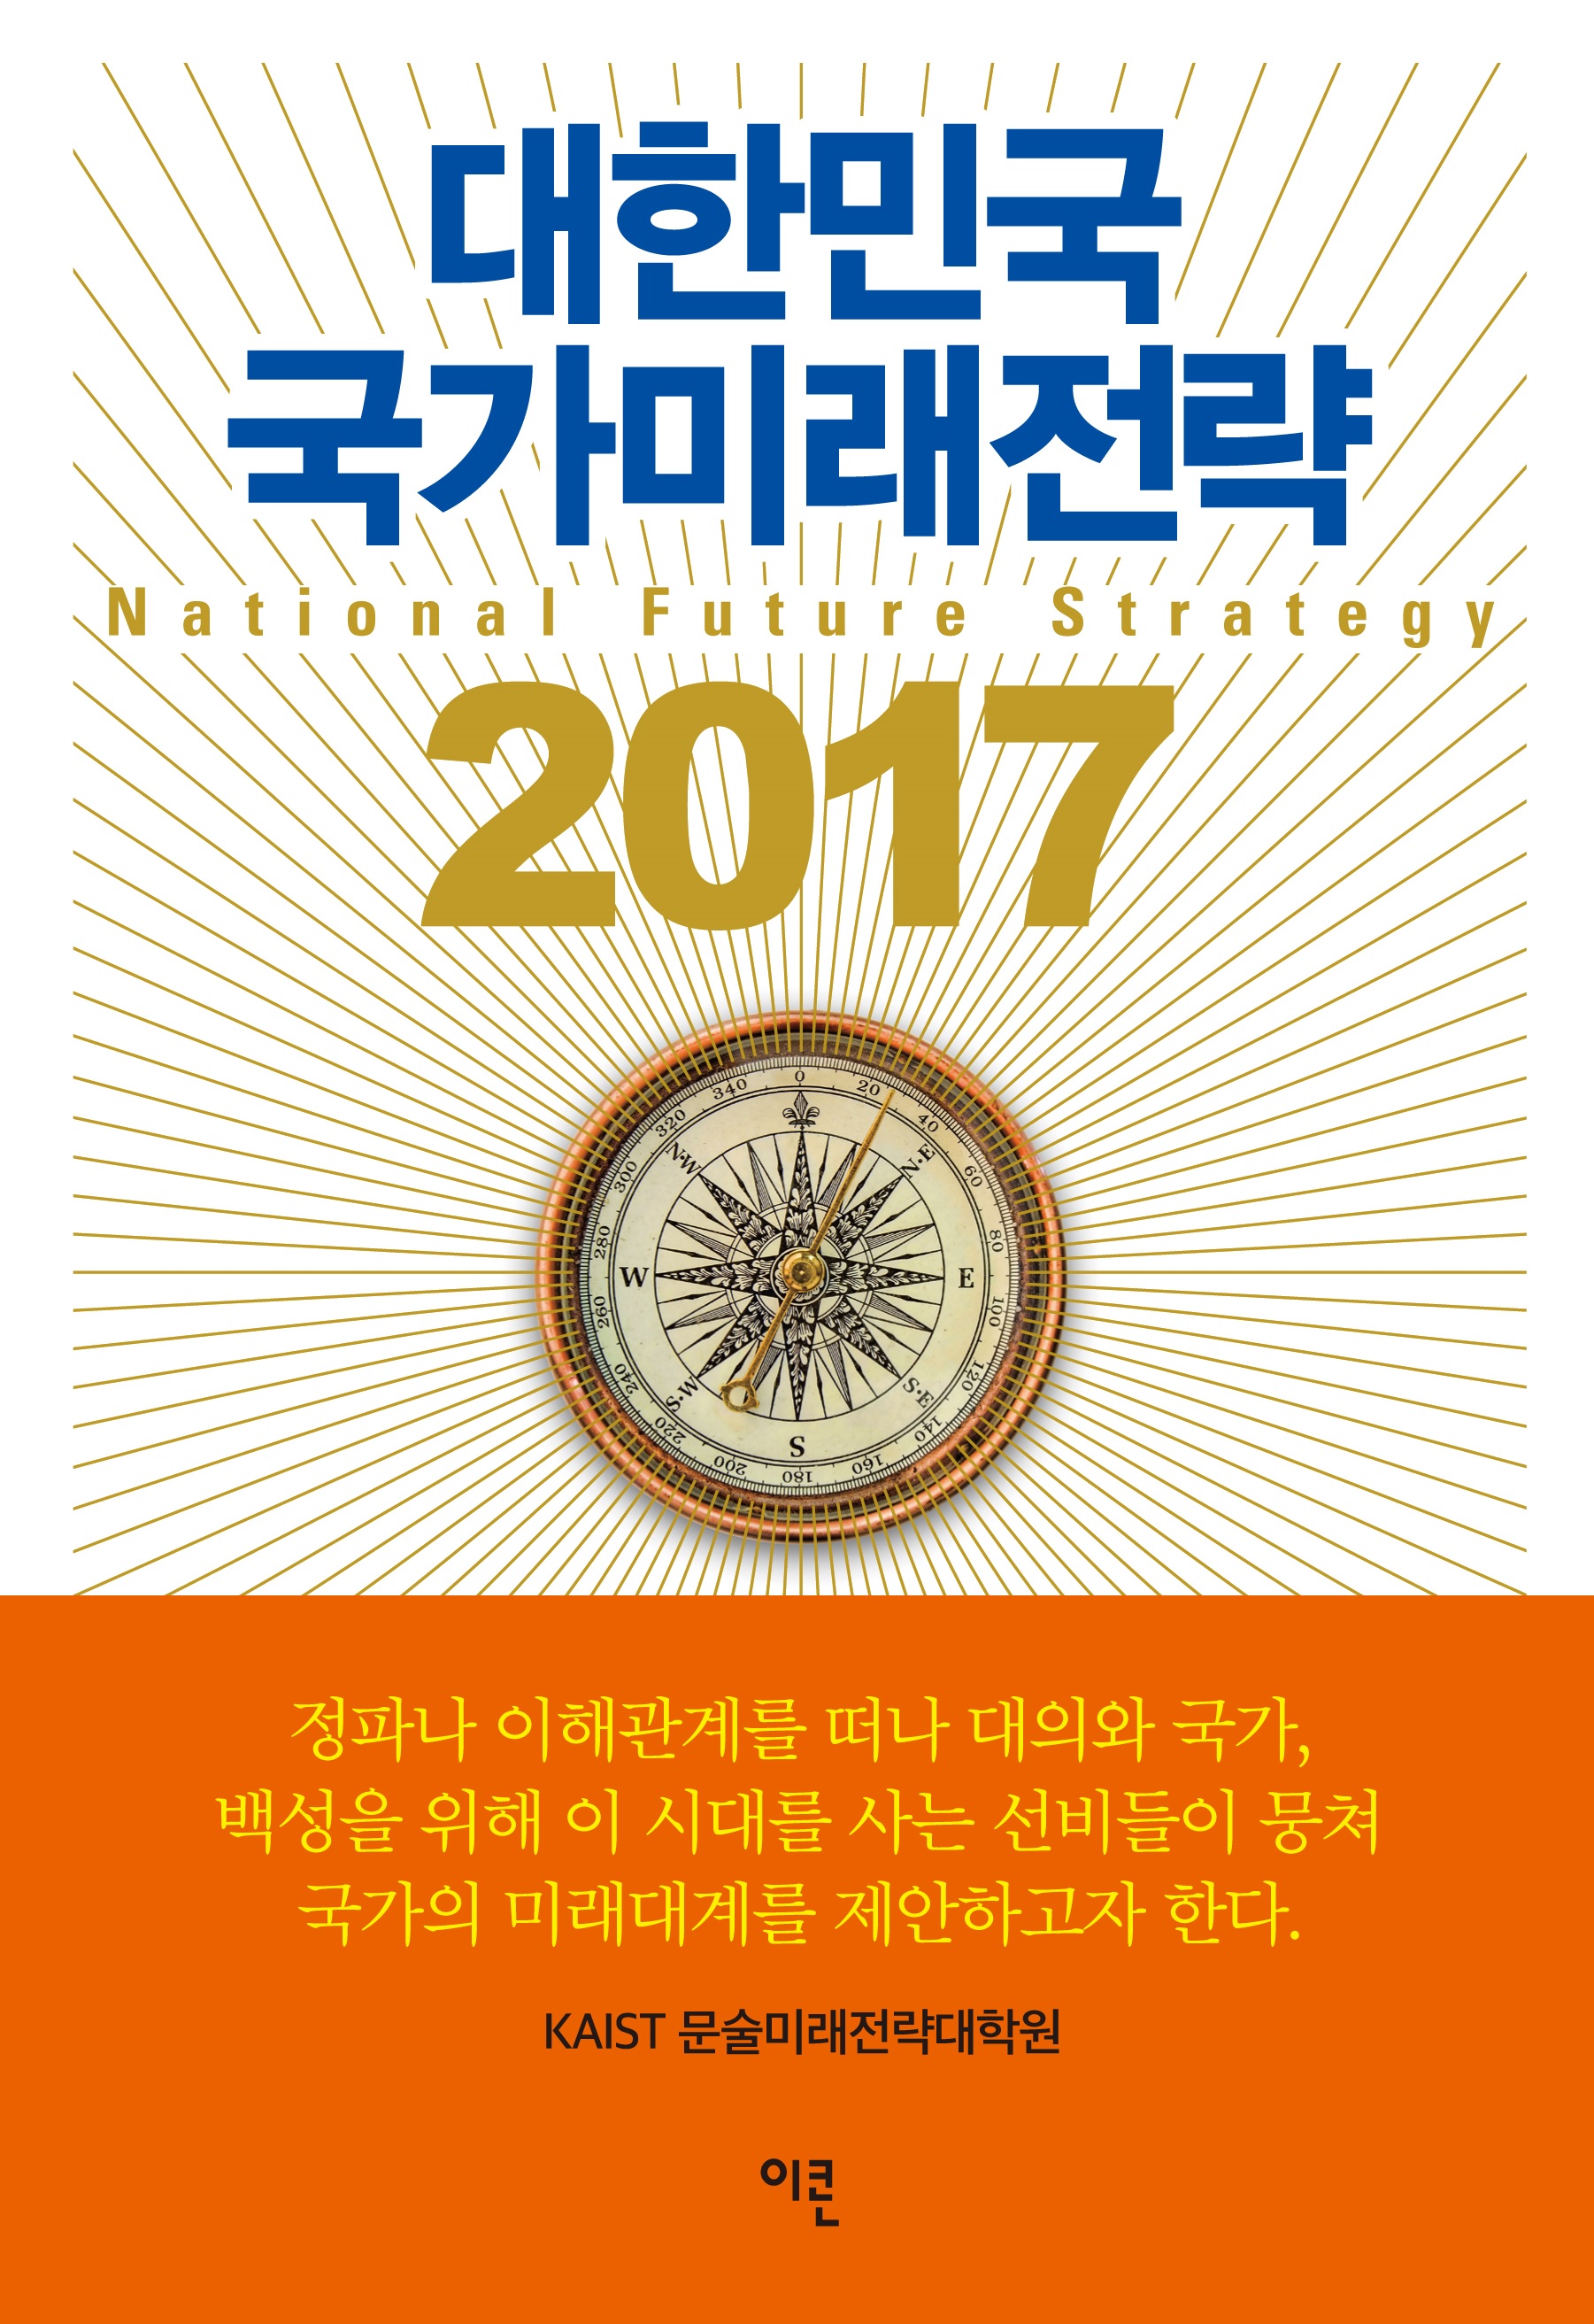 Korea National Future Strategy 2017